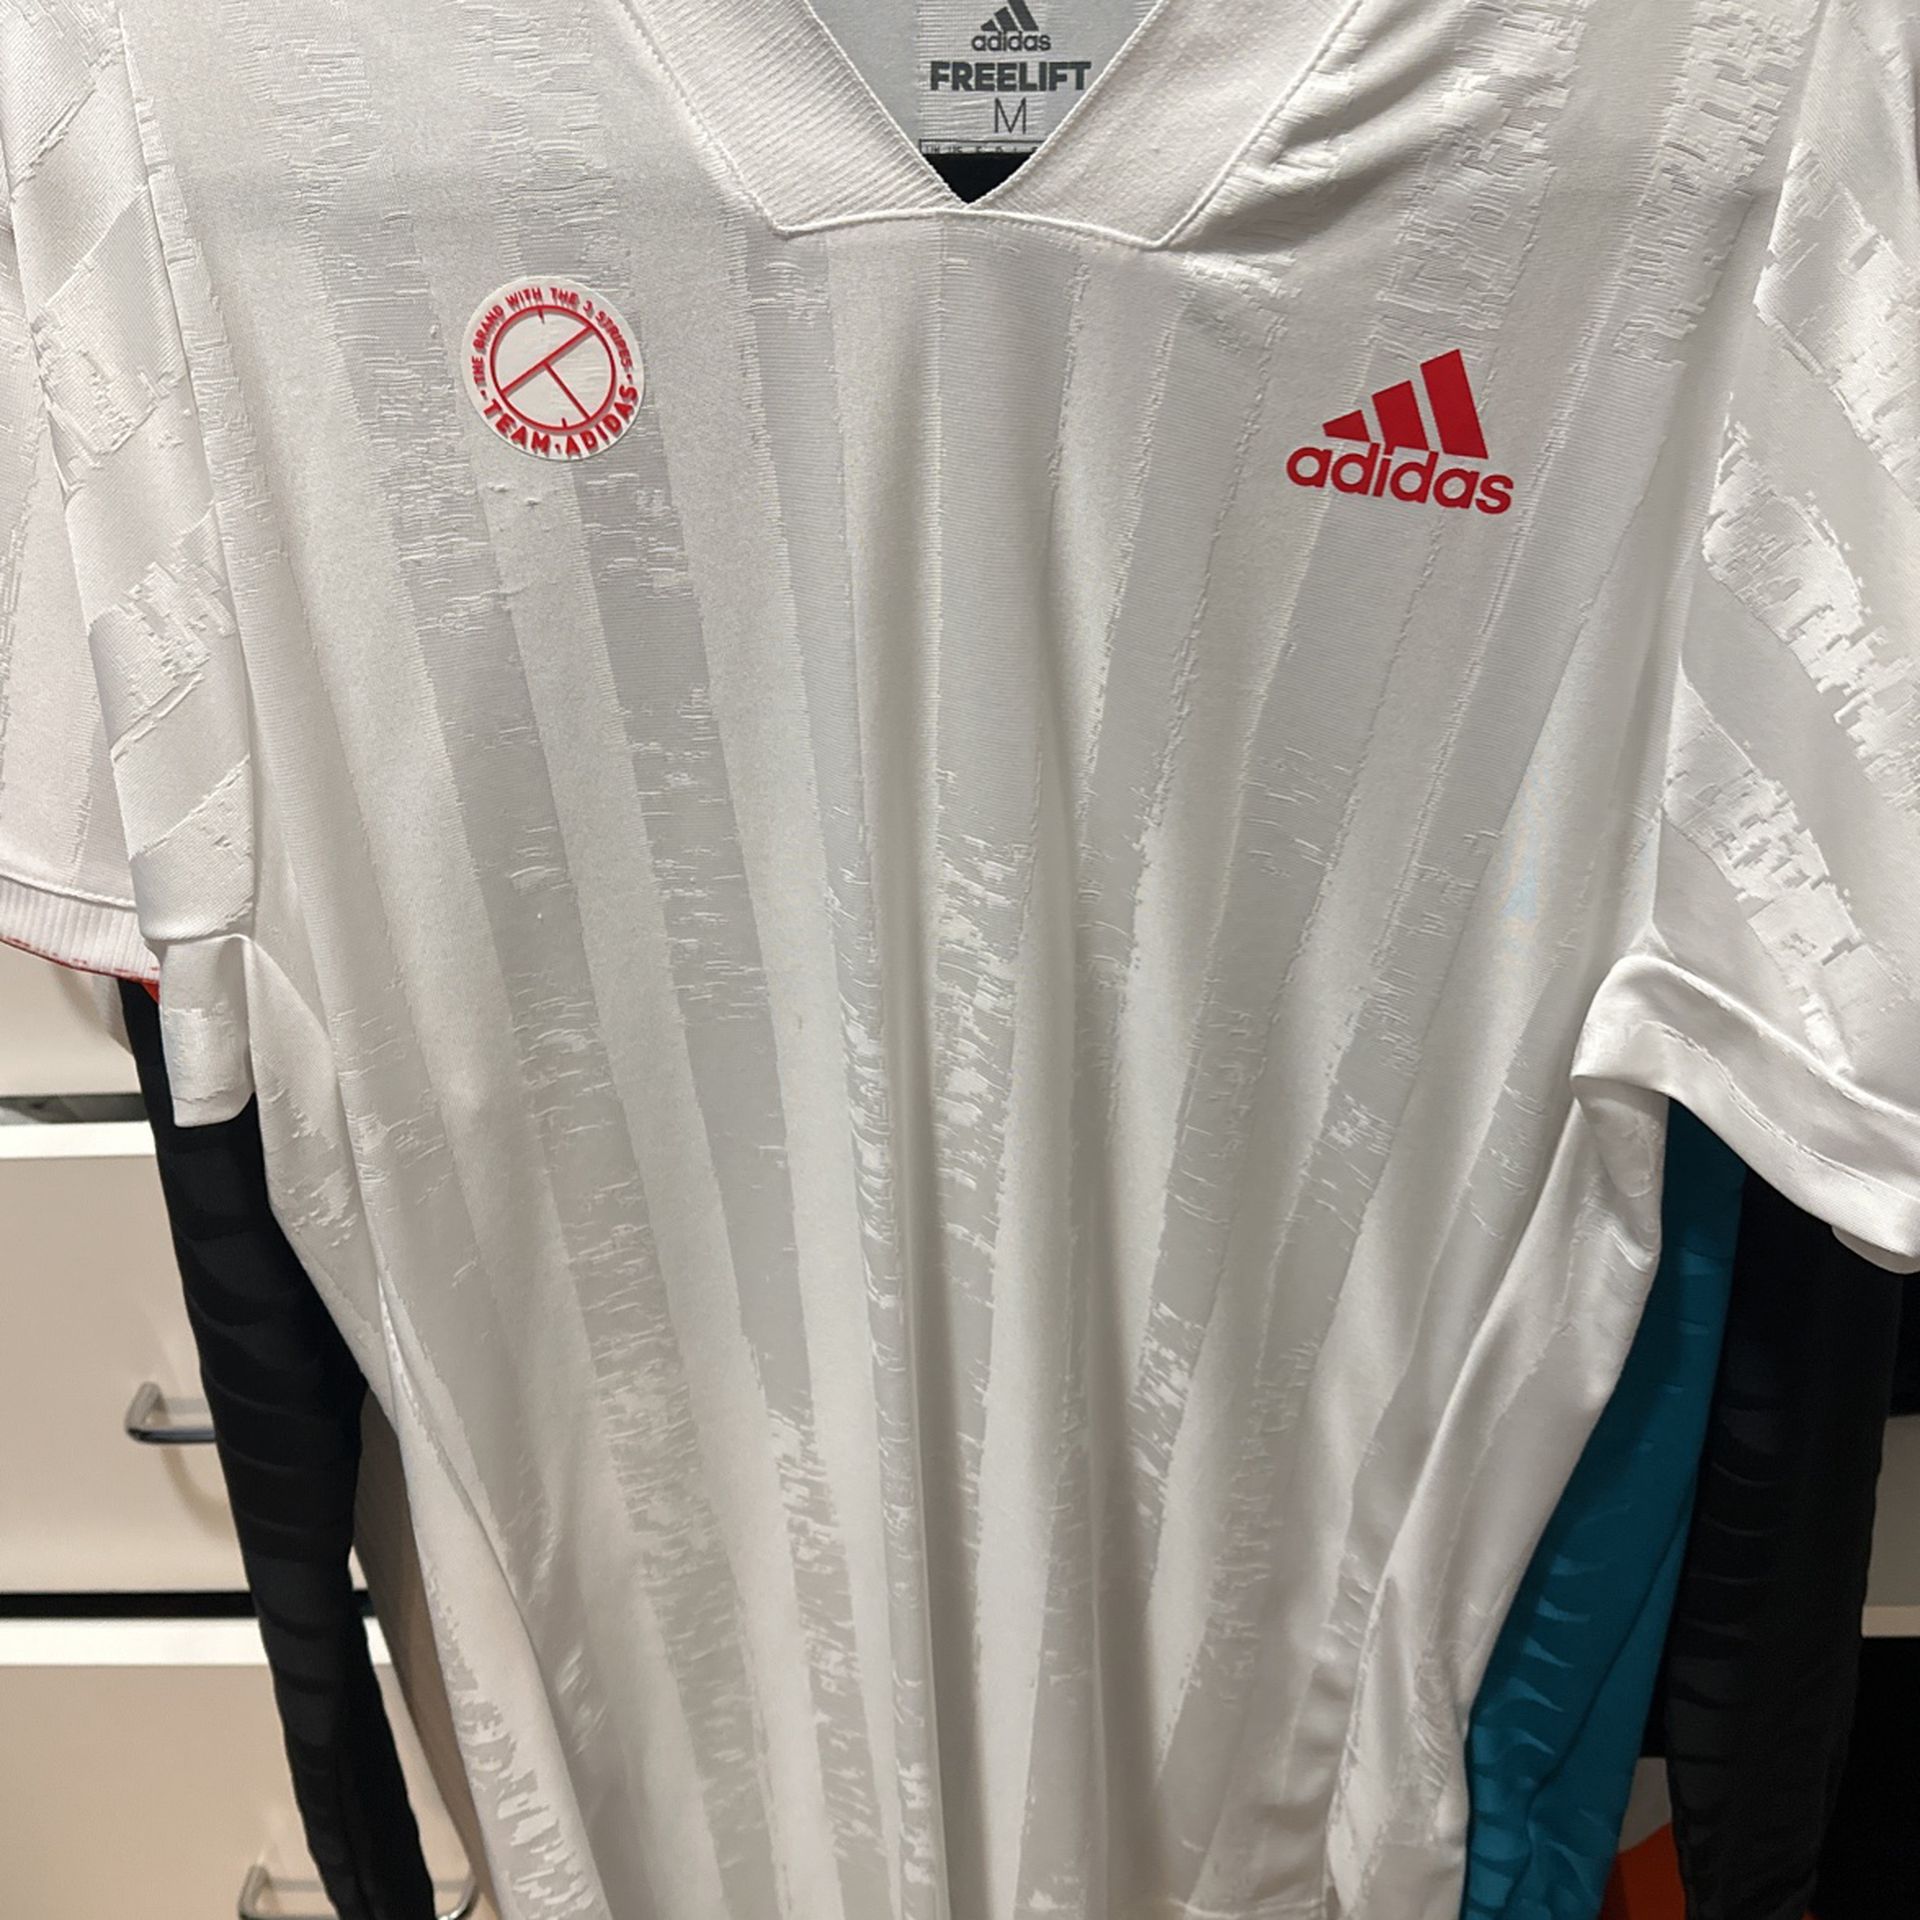 Adidas Tennis Shirt 